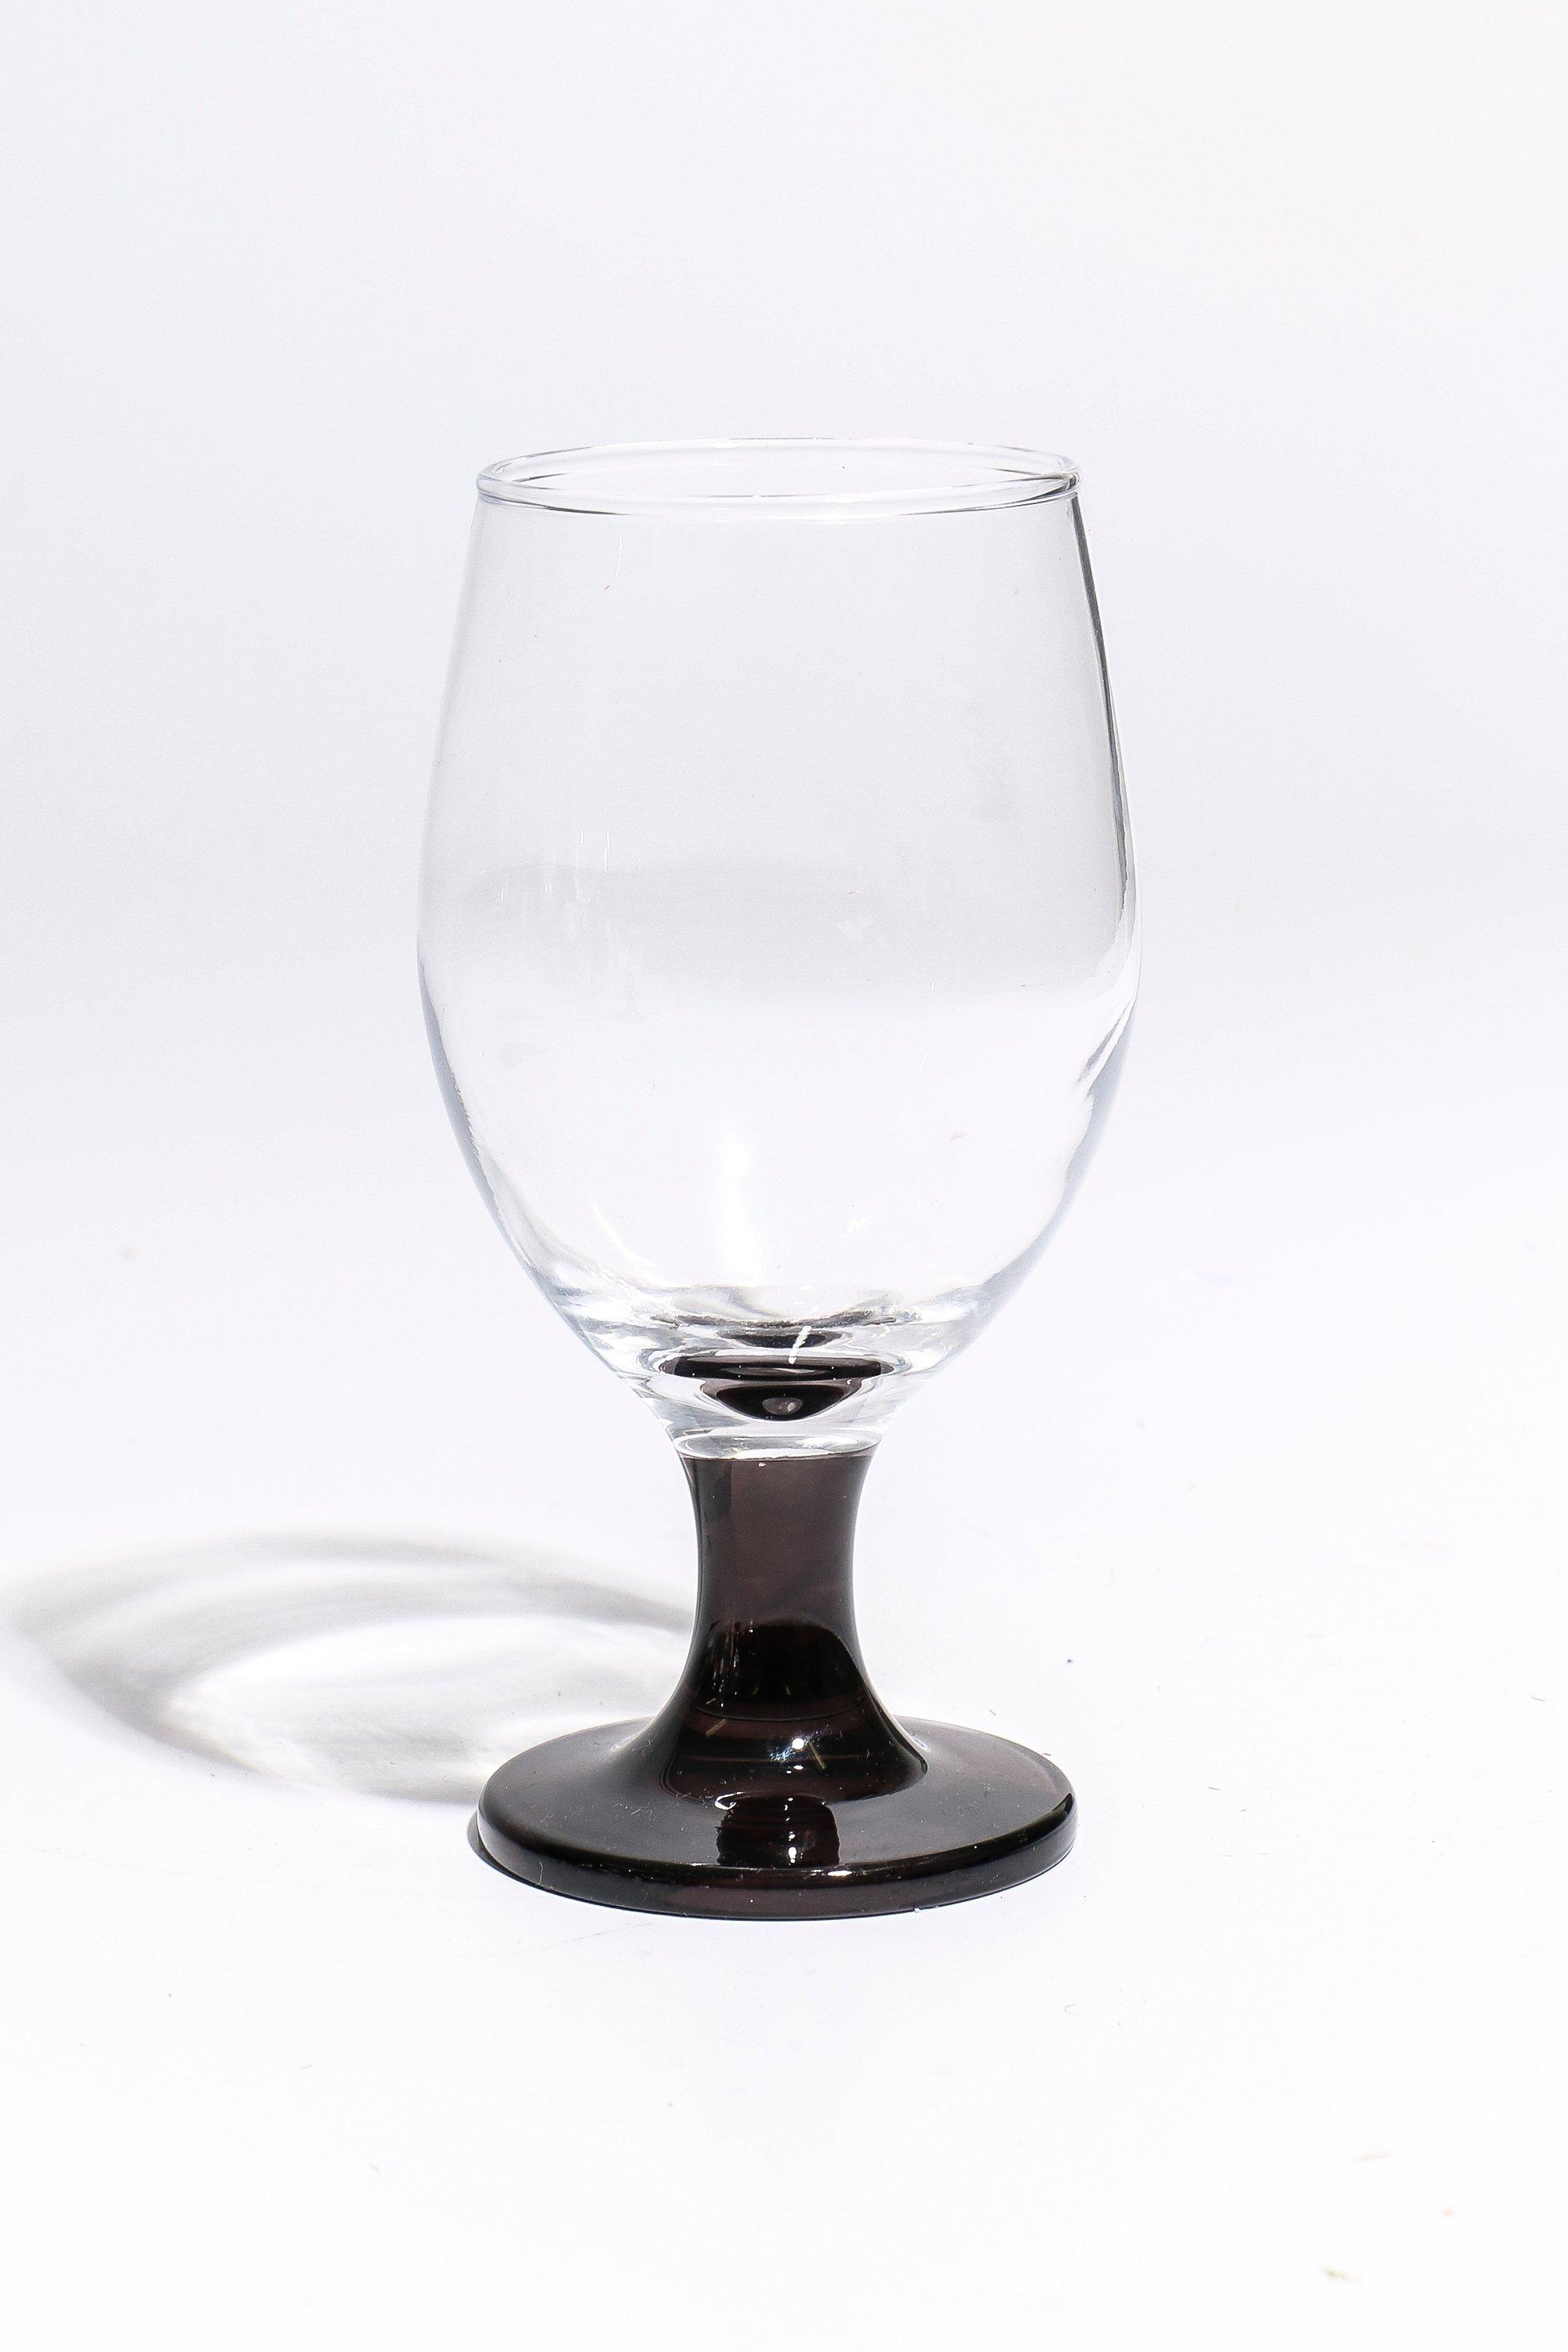 LAV Small Wine Glasses Set of 6 - 8 oz Clear White Wine Glasses Short Stem  